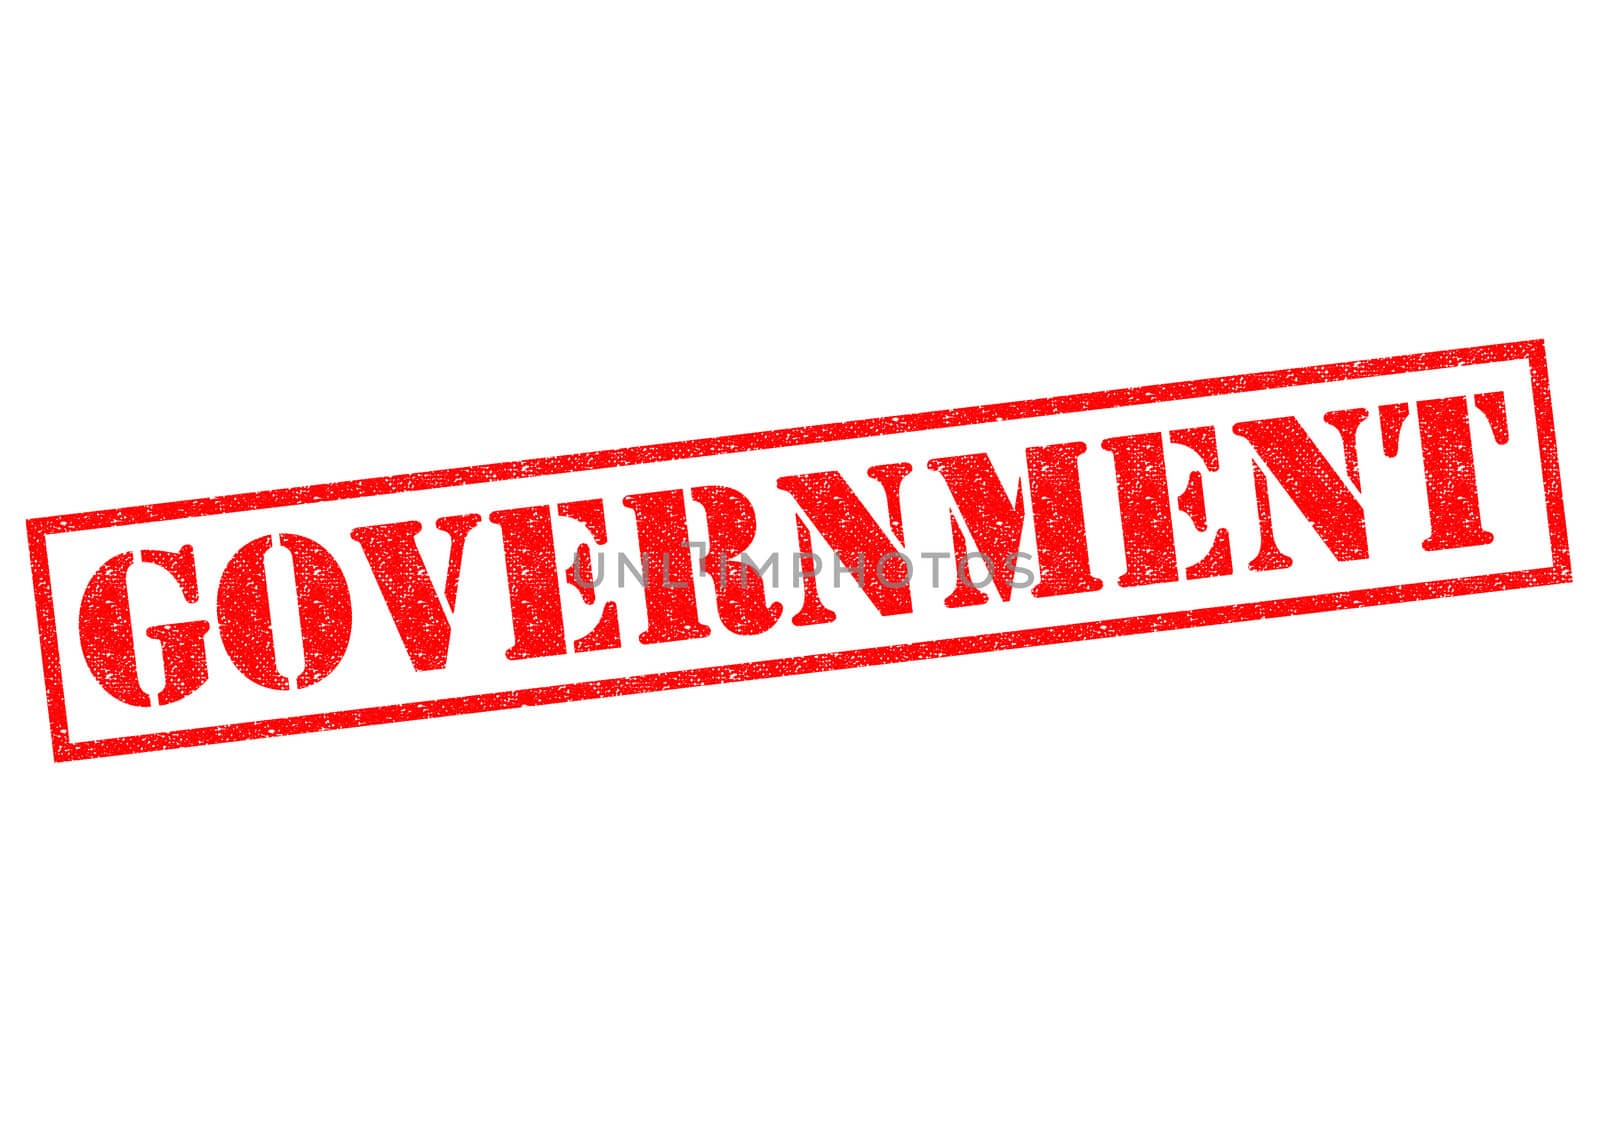 GOVERNMENT by chrisdorney